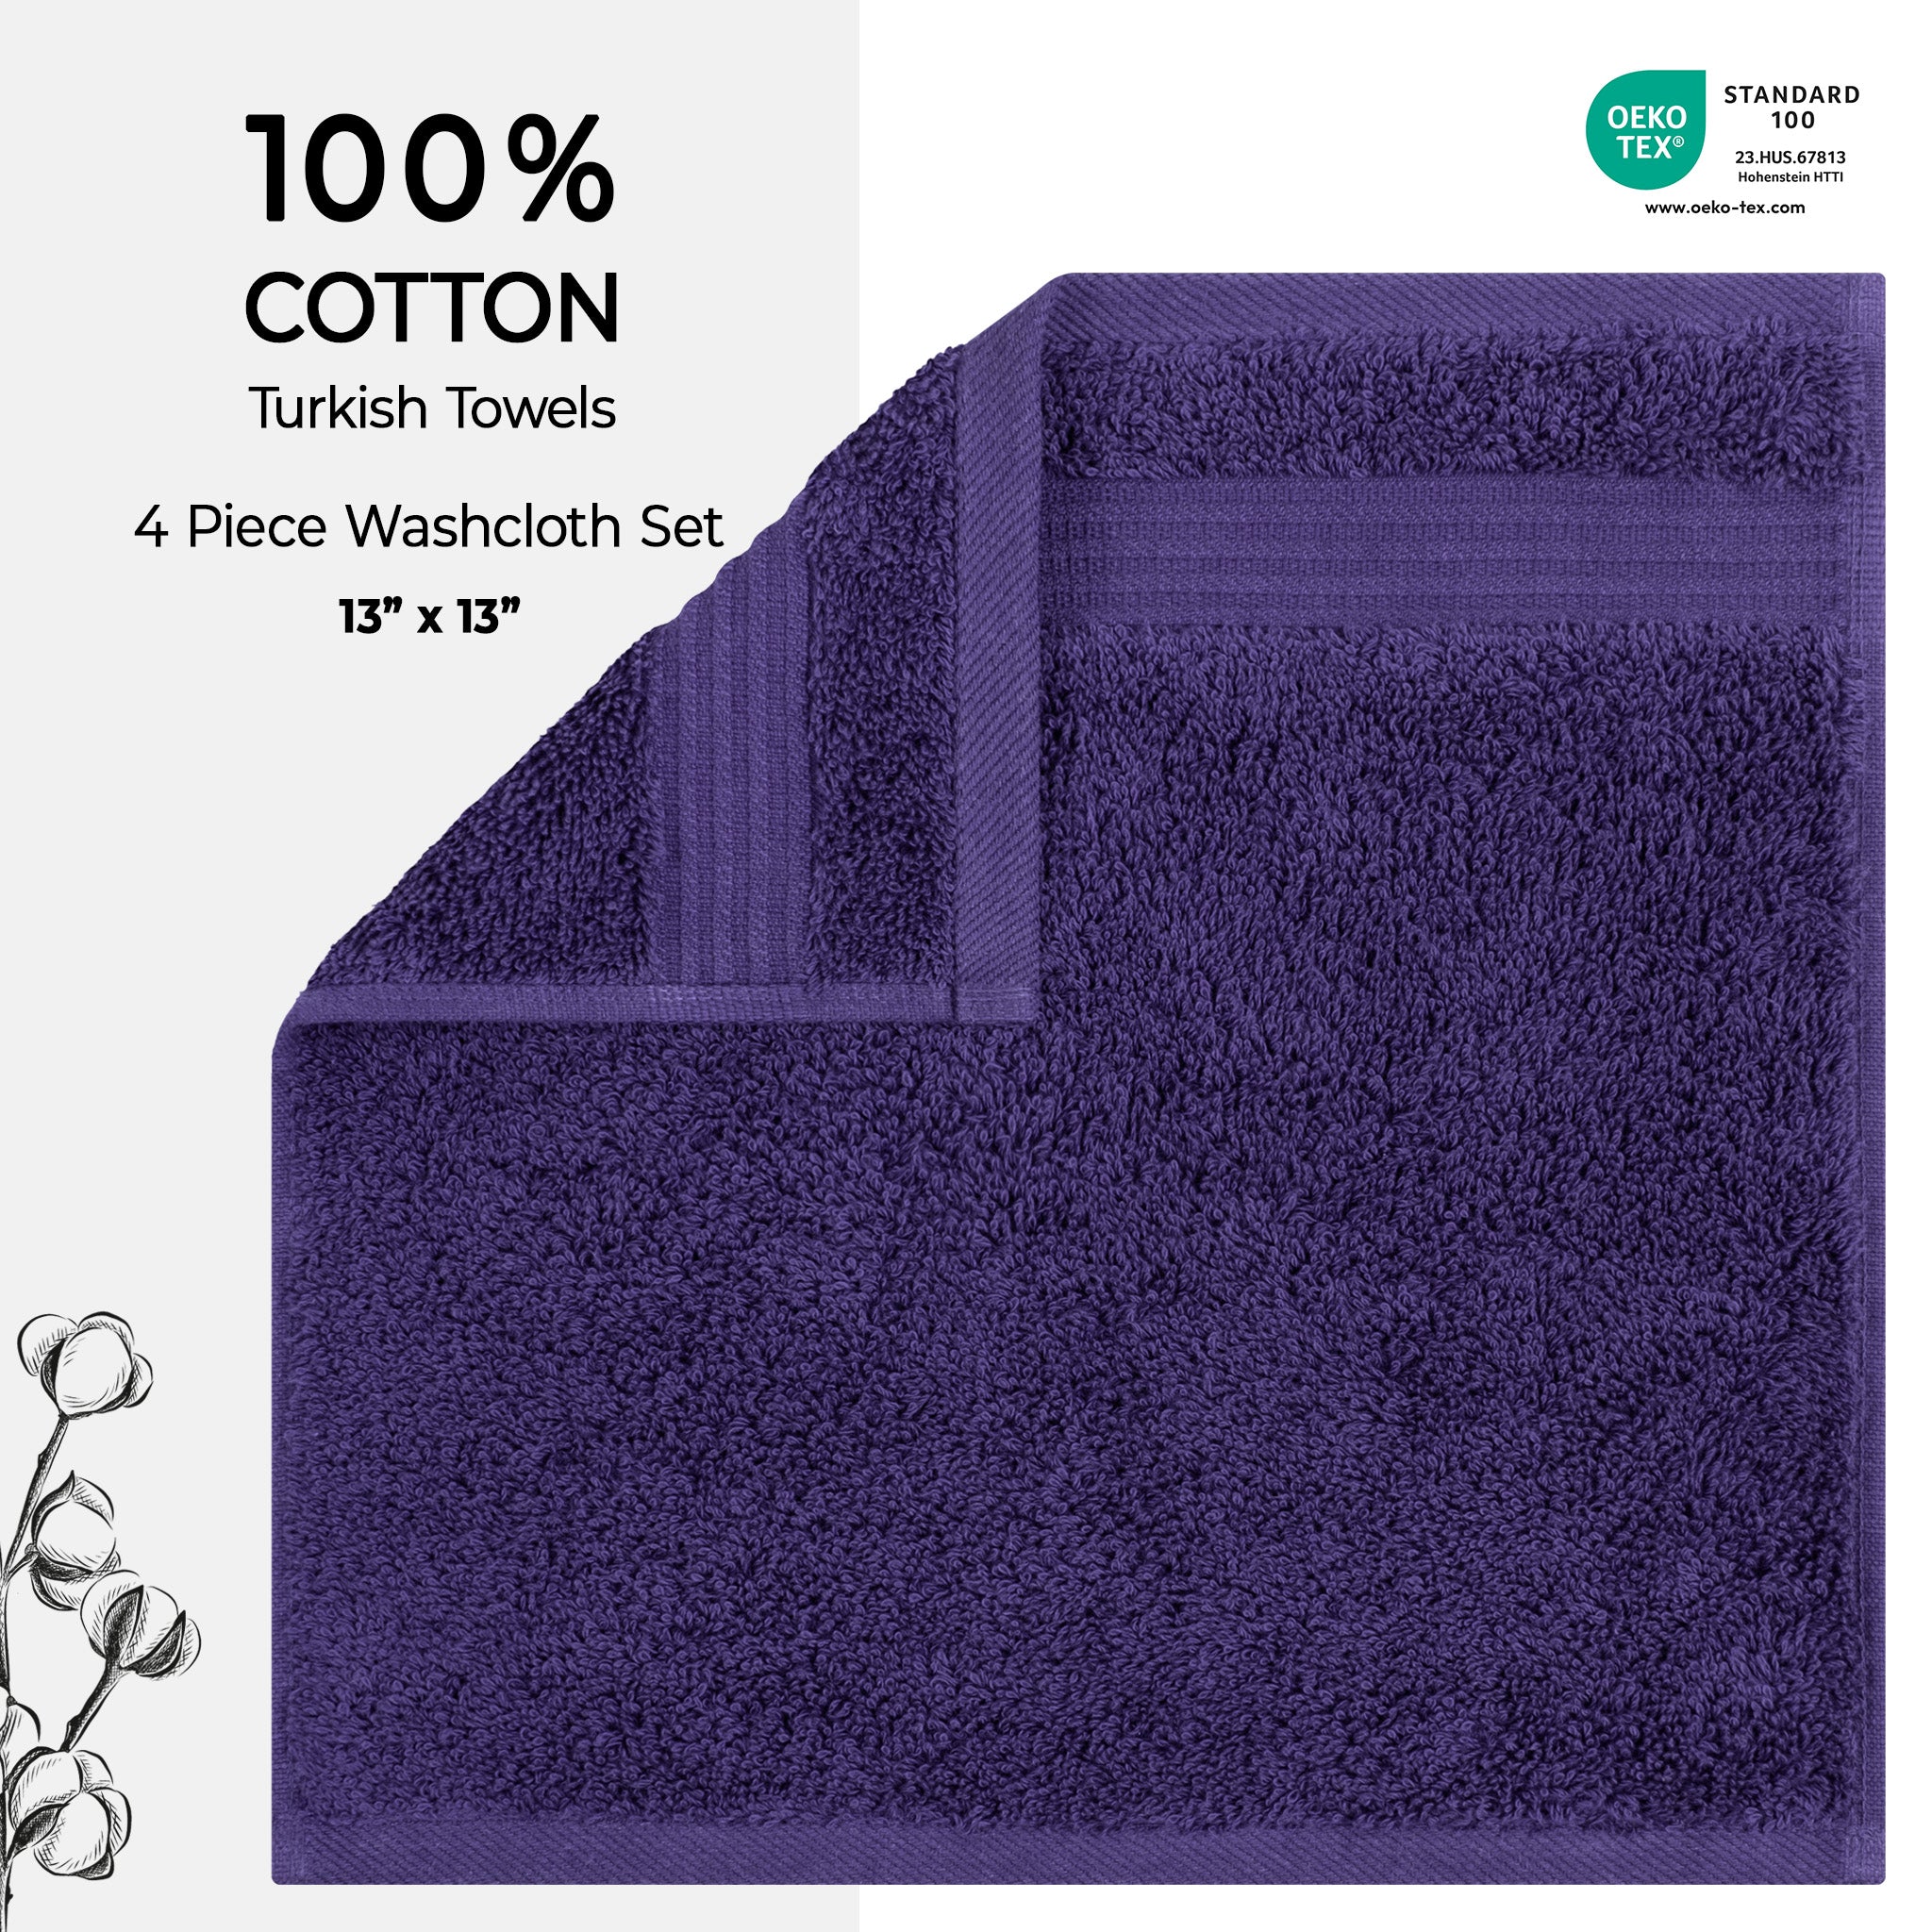 American Soft Linen Bekos 100% Cotton Turkish Towels, 4 Piece Washcloth Towel Set -purple-02